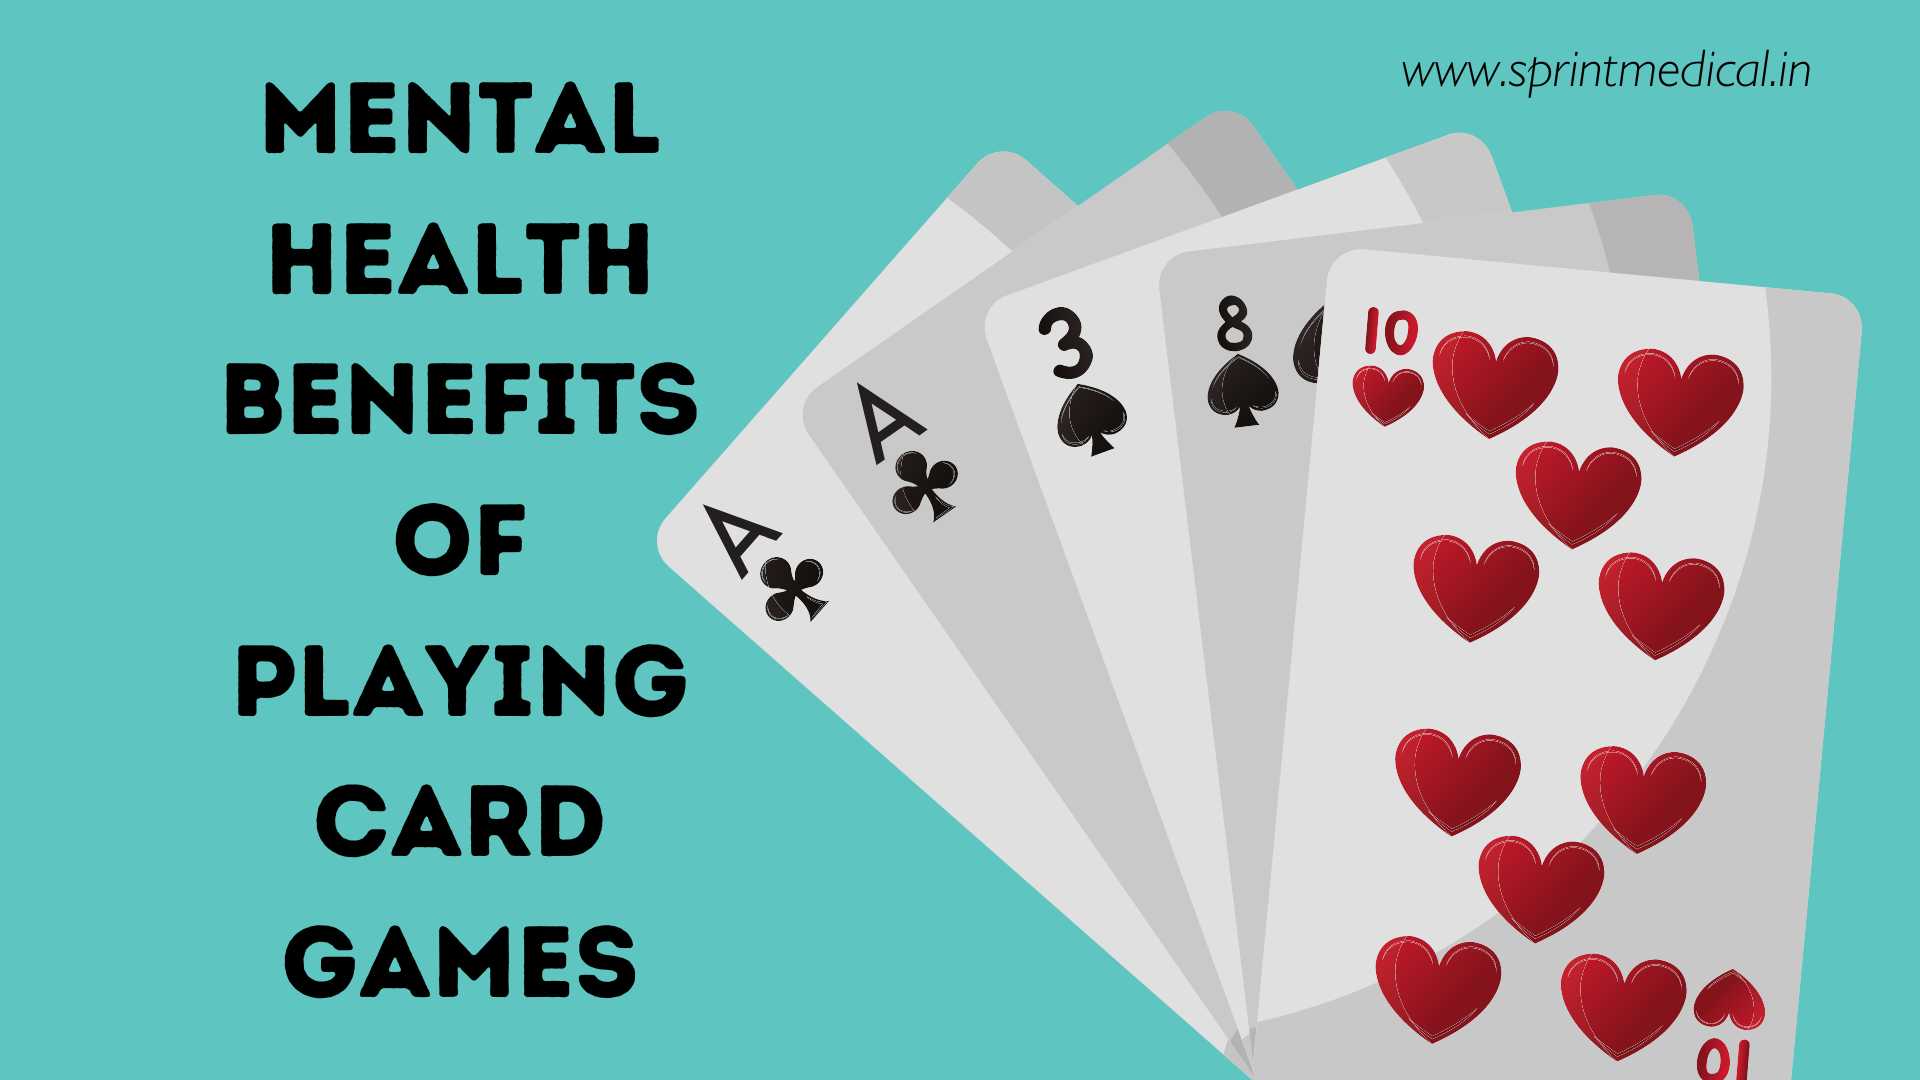 https://images.ctfassets.net/eexbcii1ci83/FFVexcCF2r9y32NKaeJuN/2c5114d698ce78b9cfbd2032b90d29cc/Mental_health_benefits_of_playing_card_games.jpg